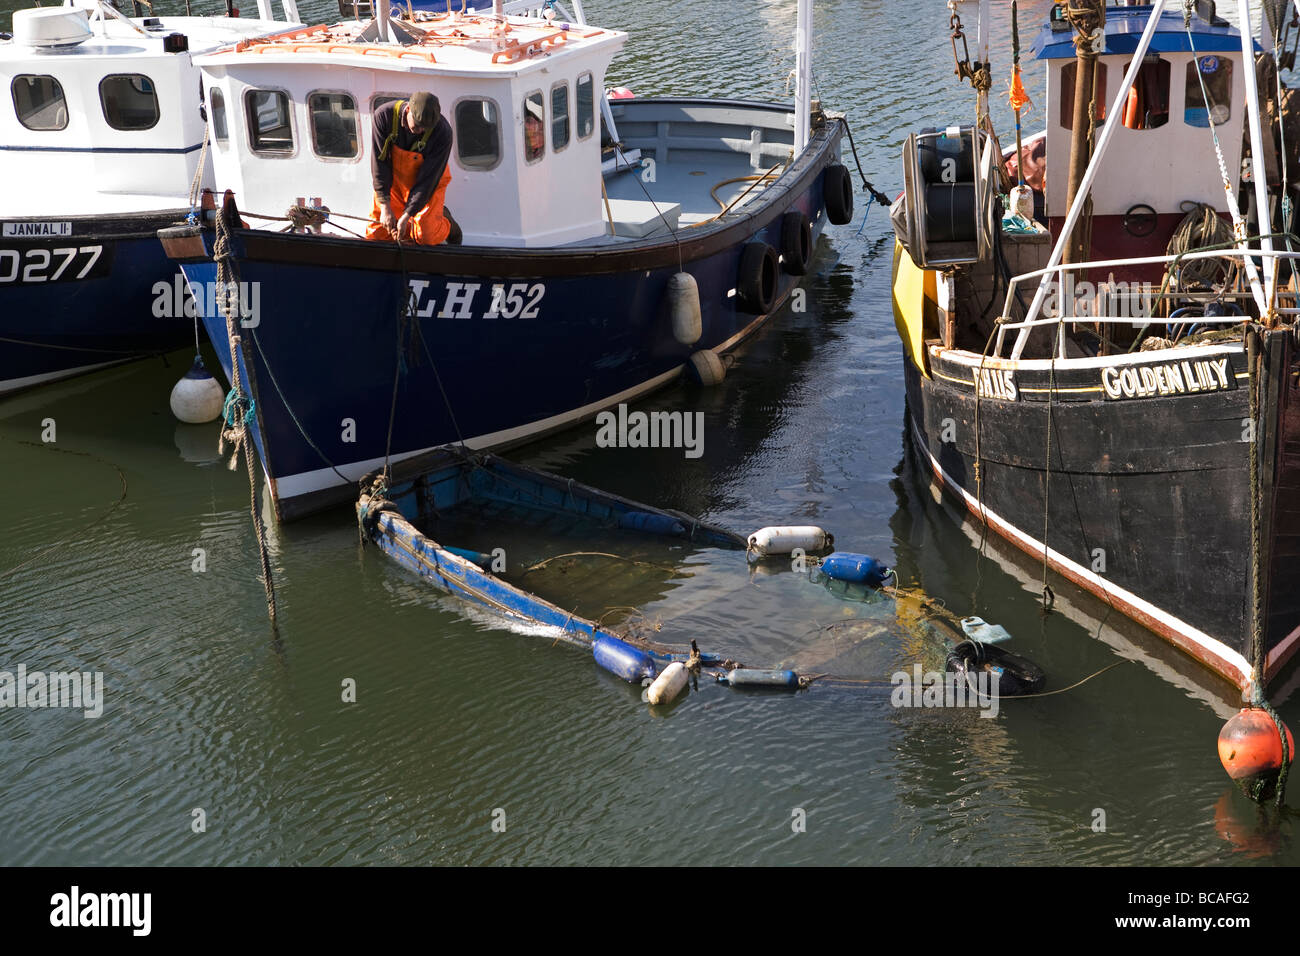 Sunken boat being raised by fisherman within Roker marina, Sunderland, England, UK Stock Photo